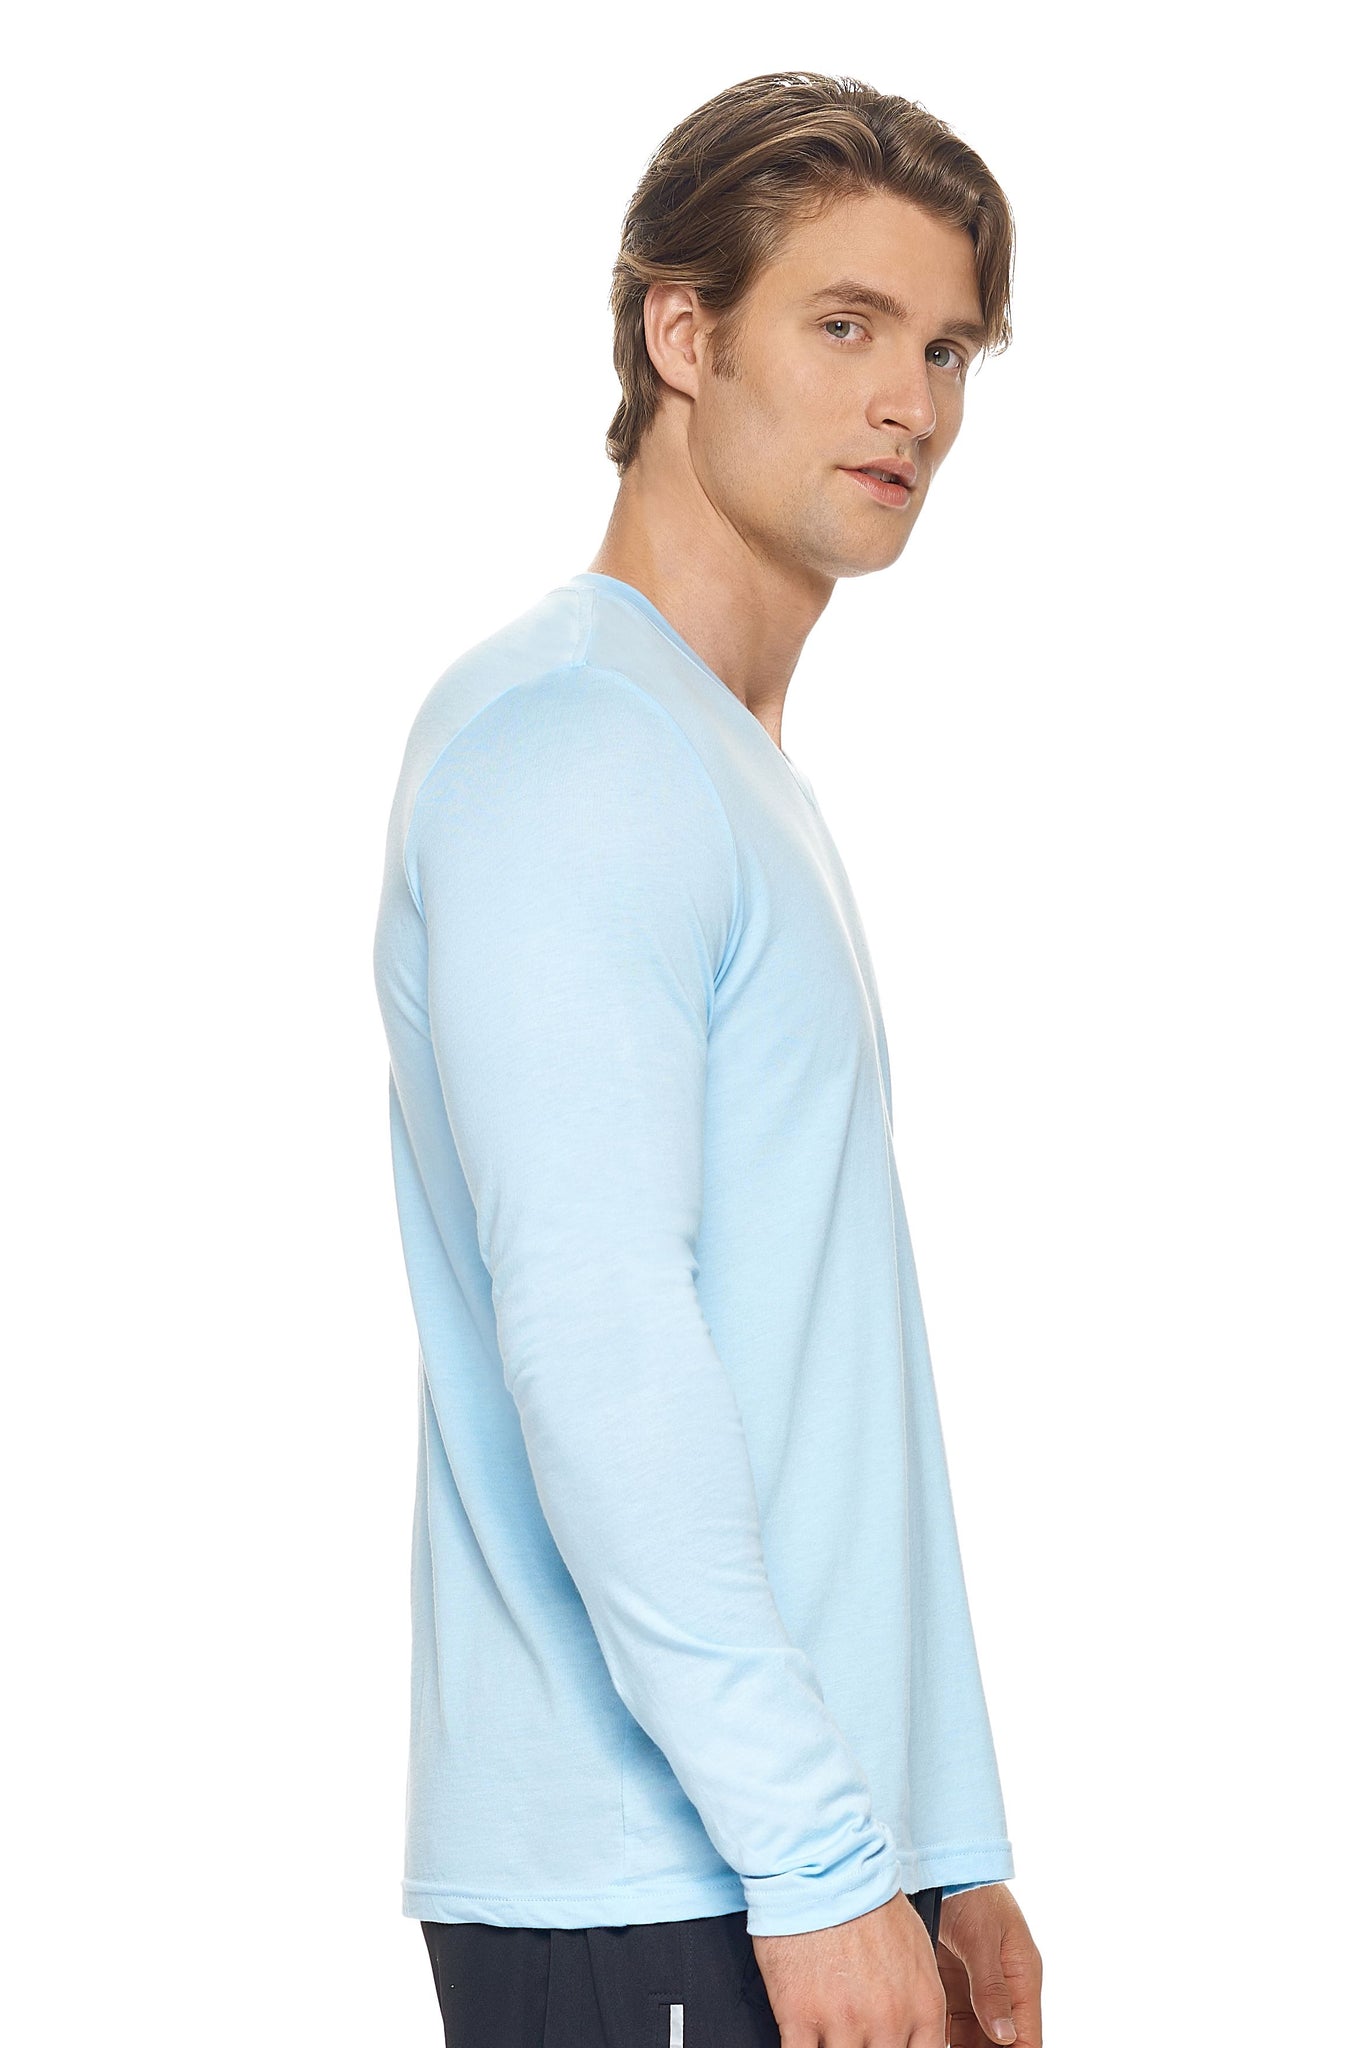 MC917🇺🇸🍃 MoCA™ V-Neck Long Sleeve Tee - Expert Brand#light-blue